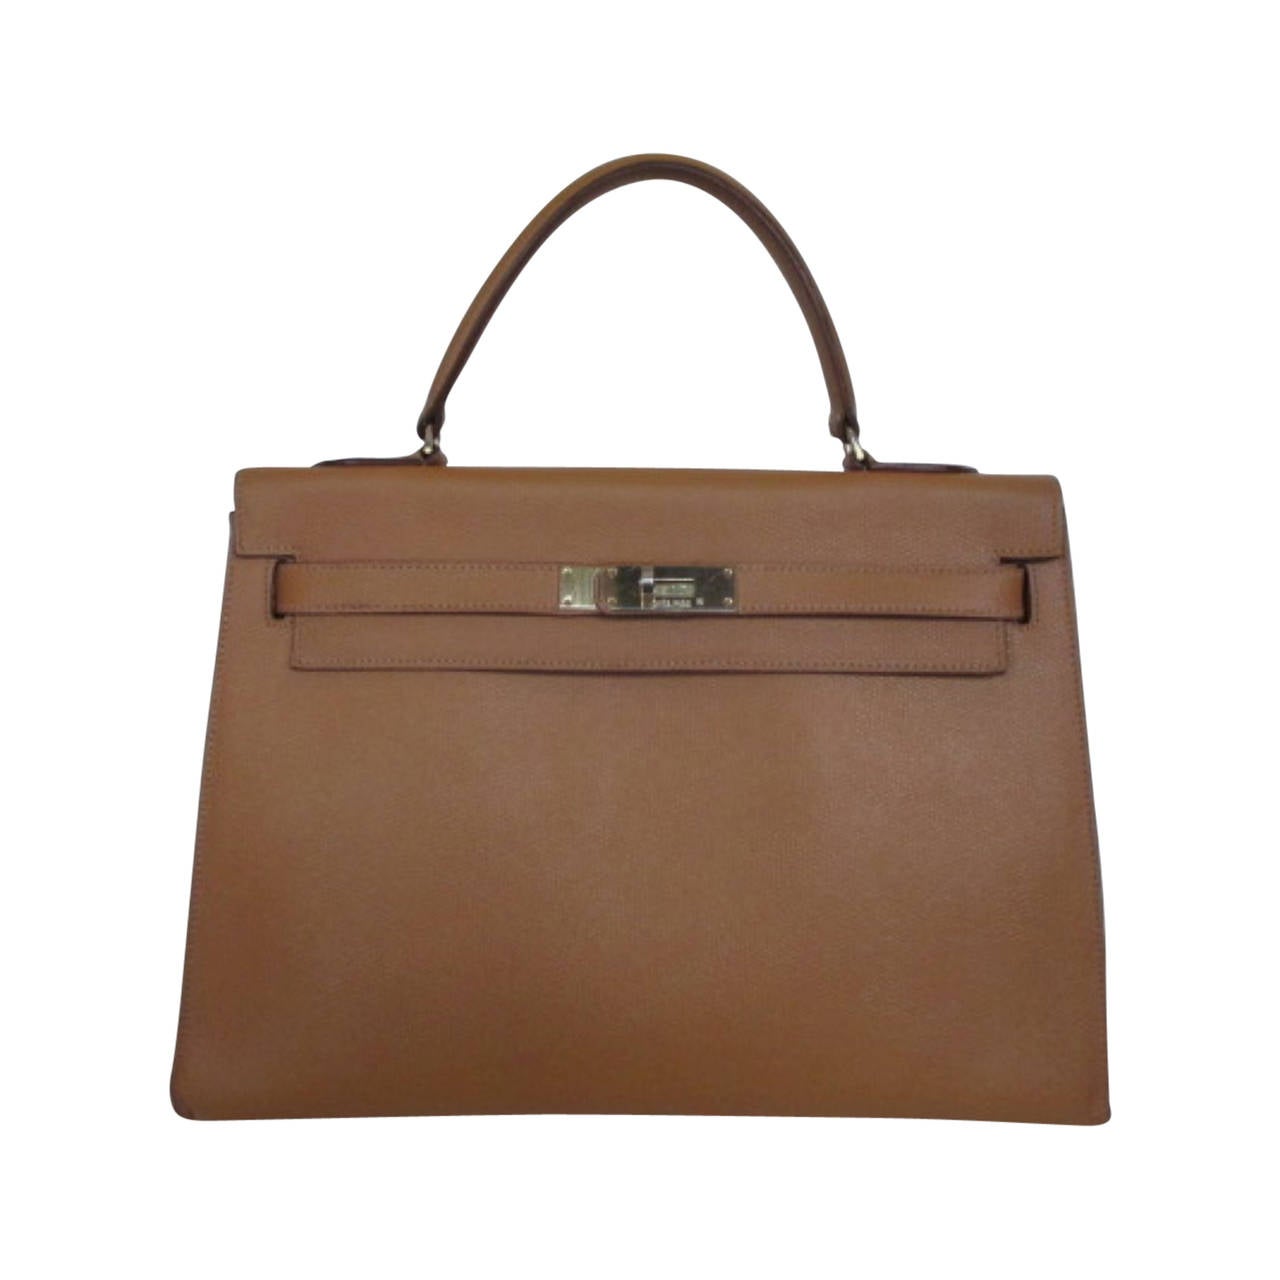 Classic Hermes Sellier Kelly 32 epsom leather bag